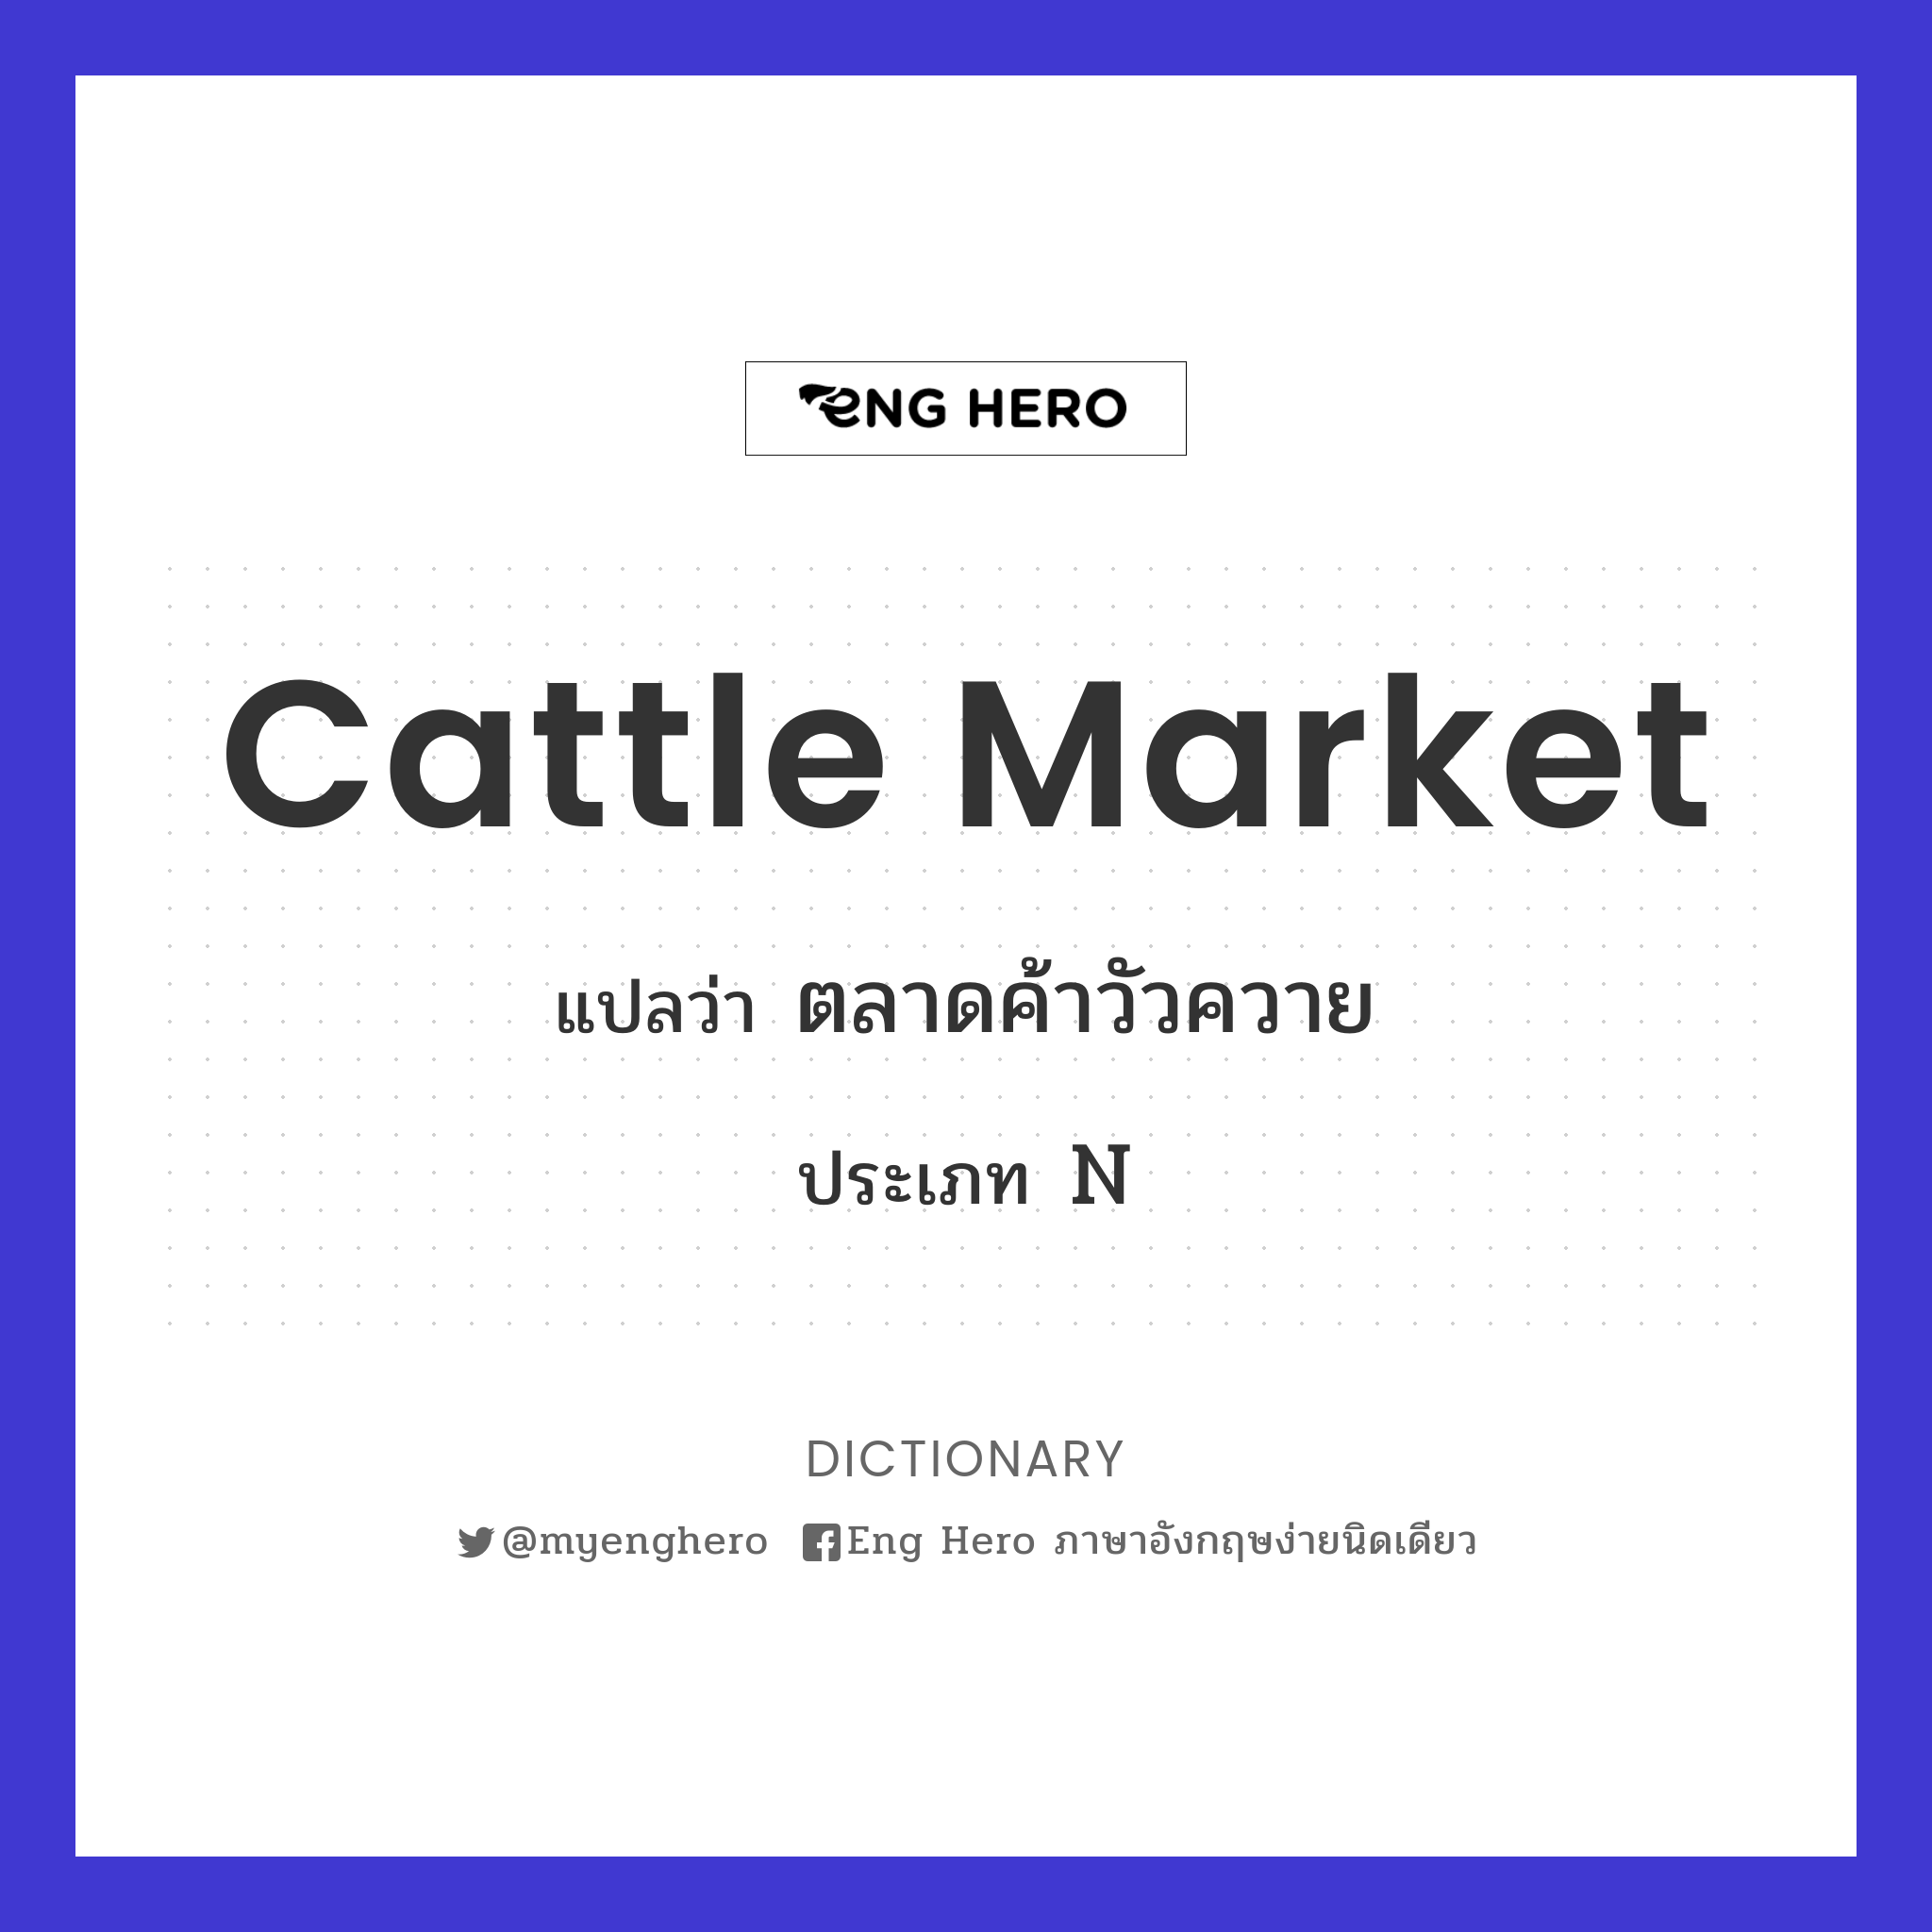 cattle market